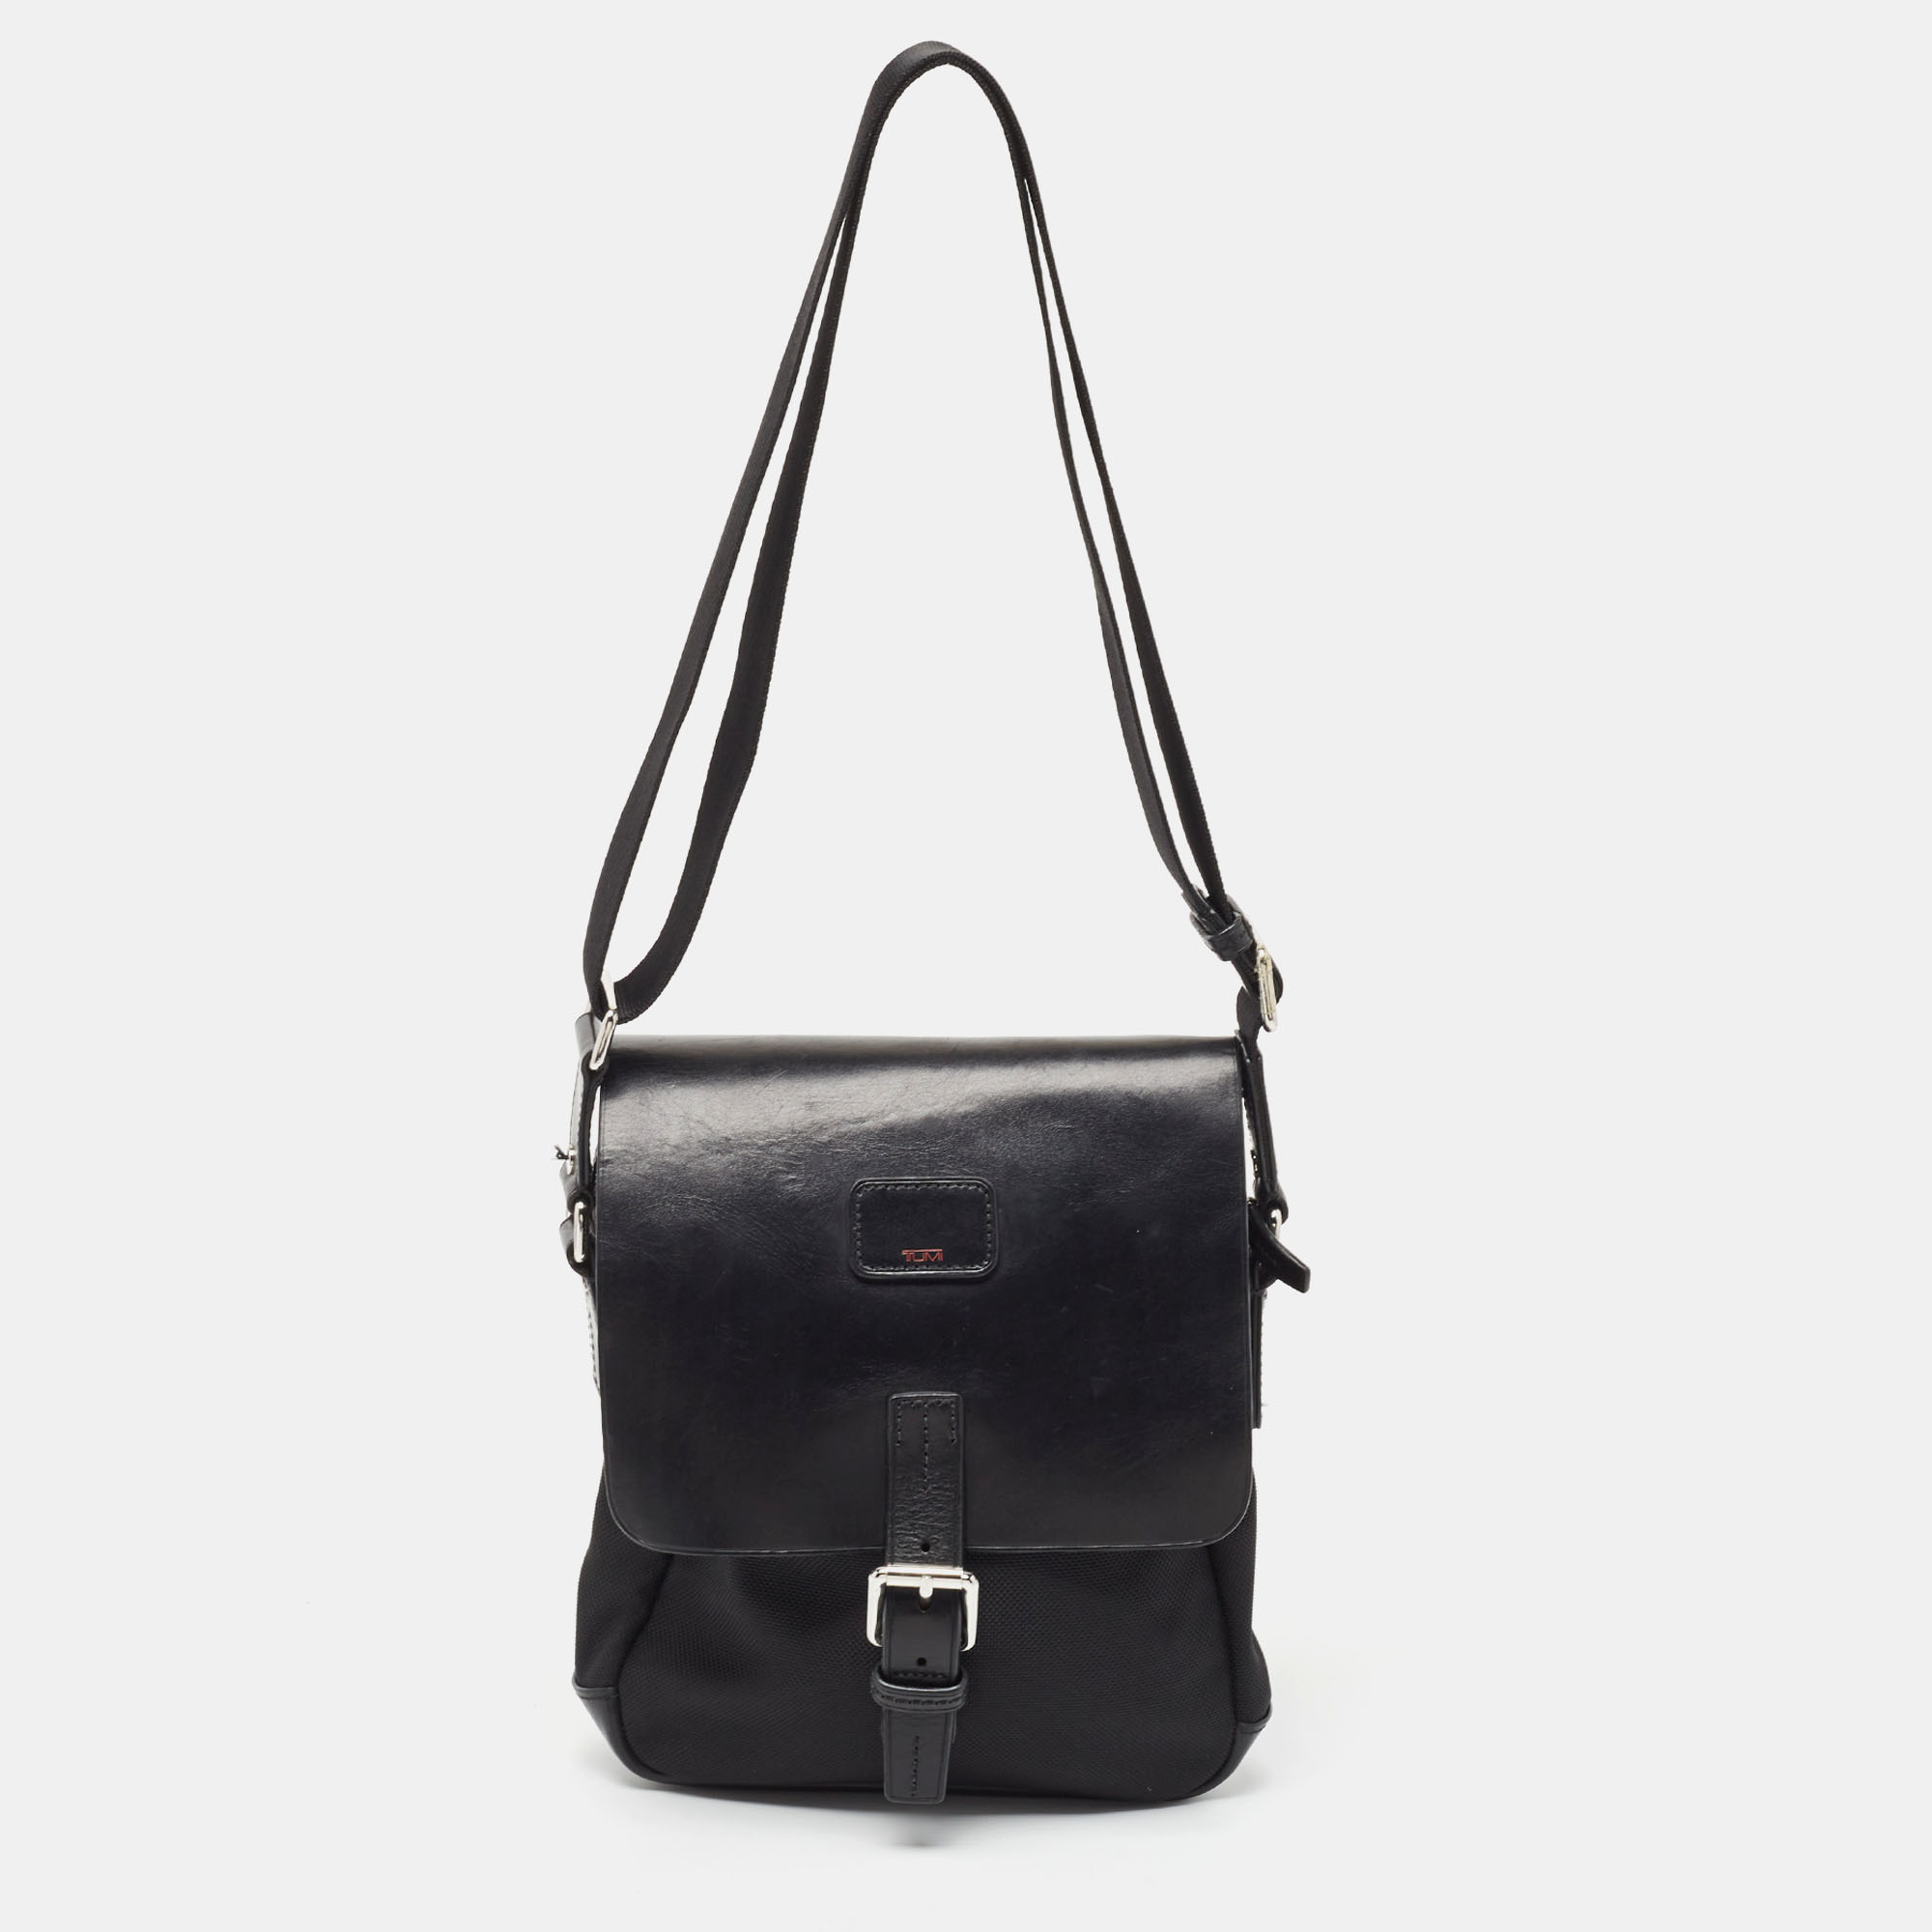 TUMI Black Leather And Nylon Crossbody Bag